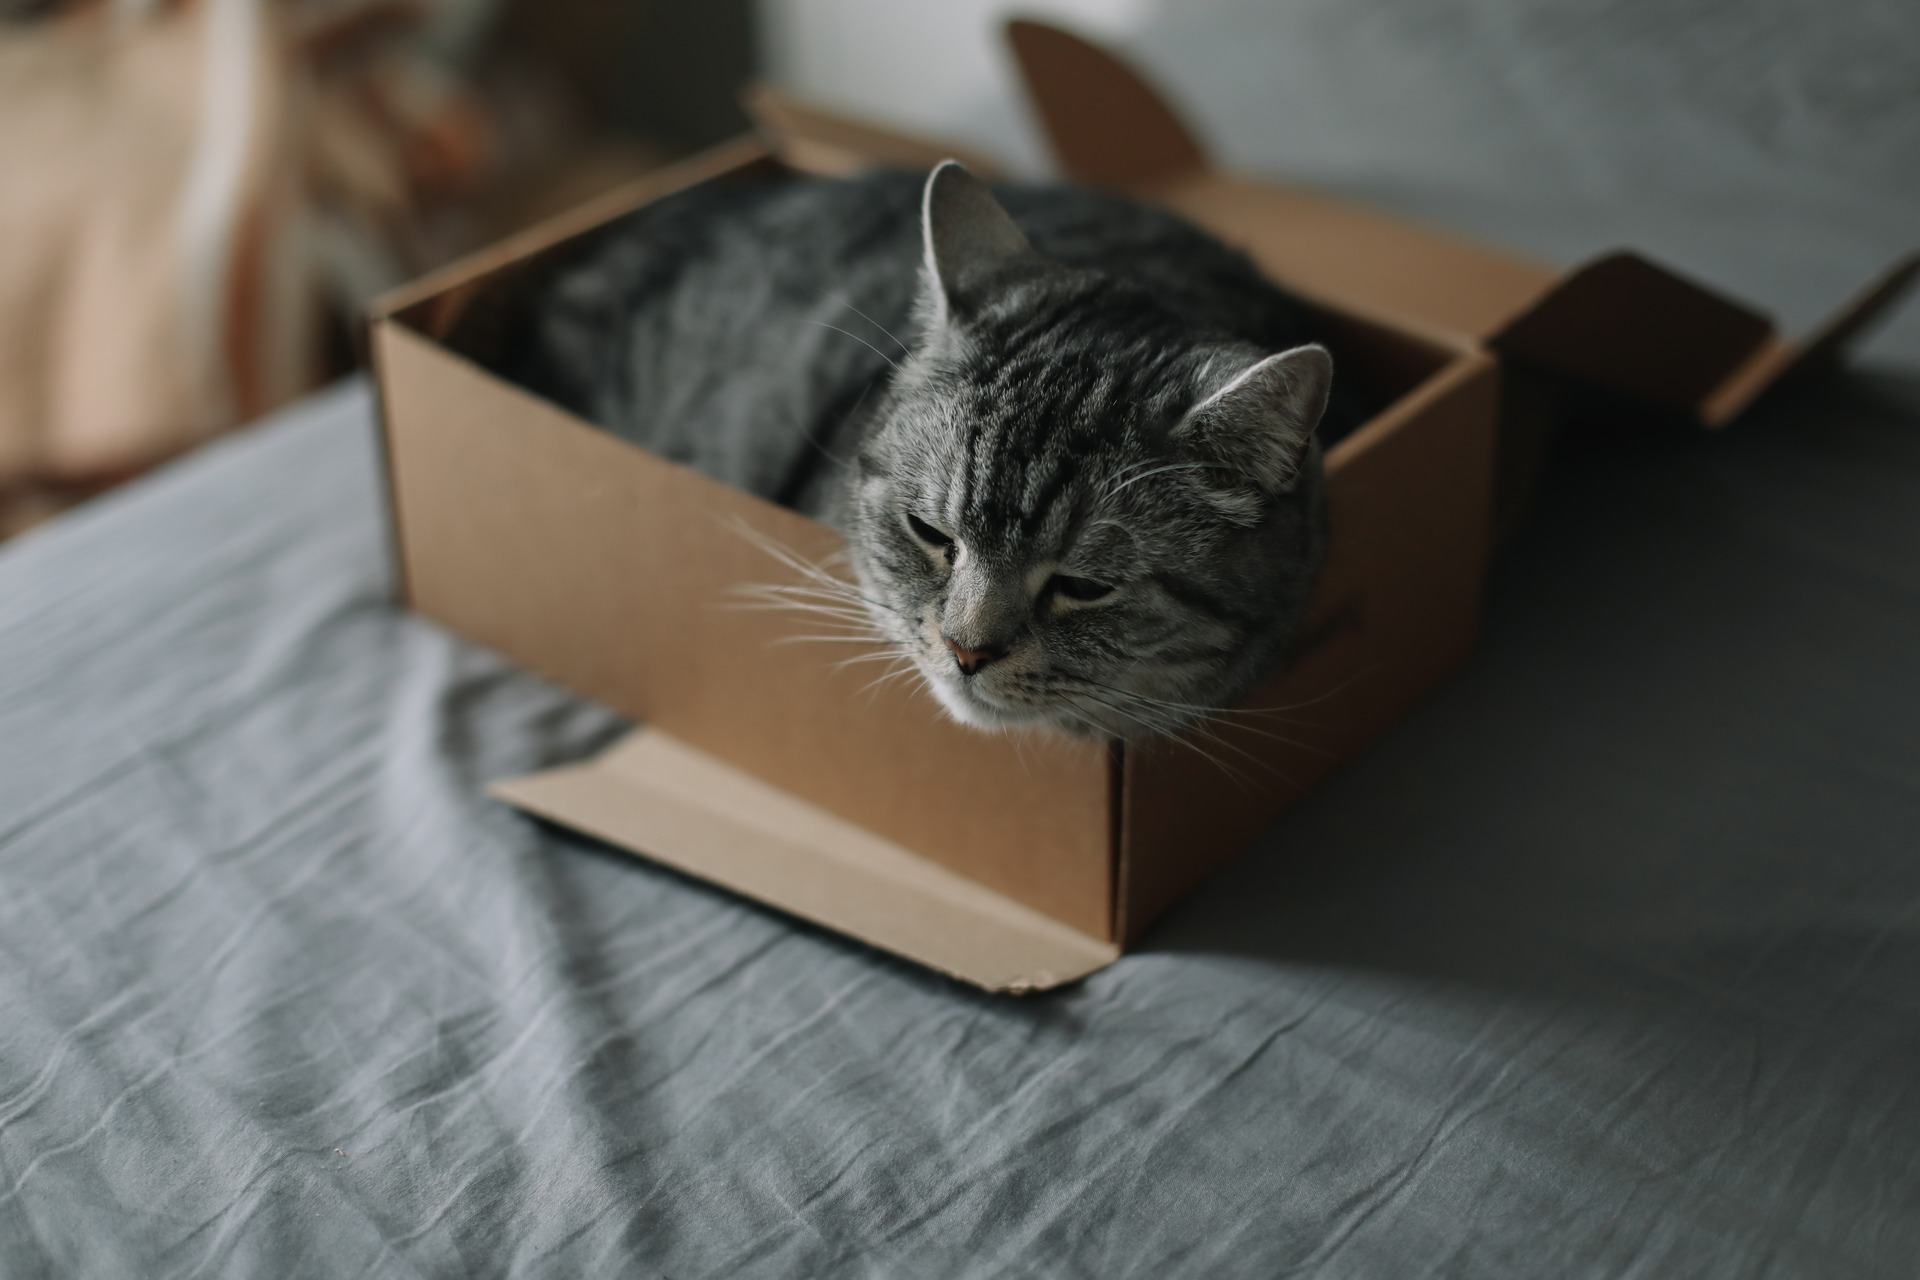 A cat sleeping in a cardboard box